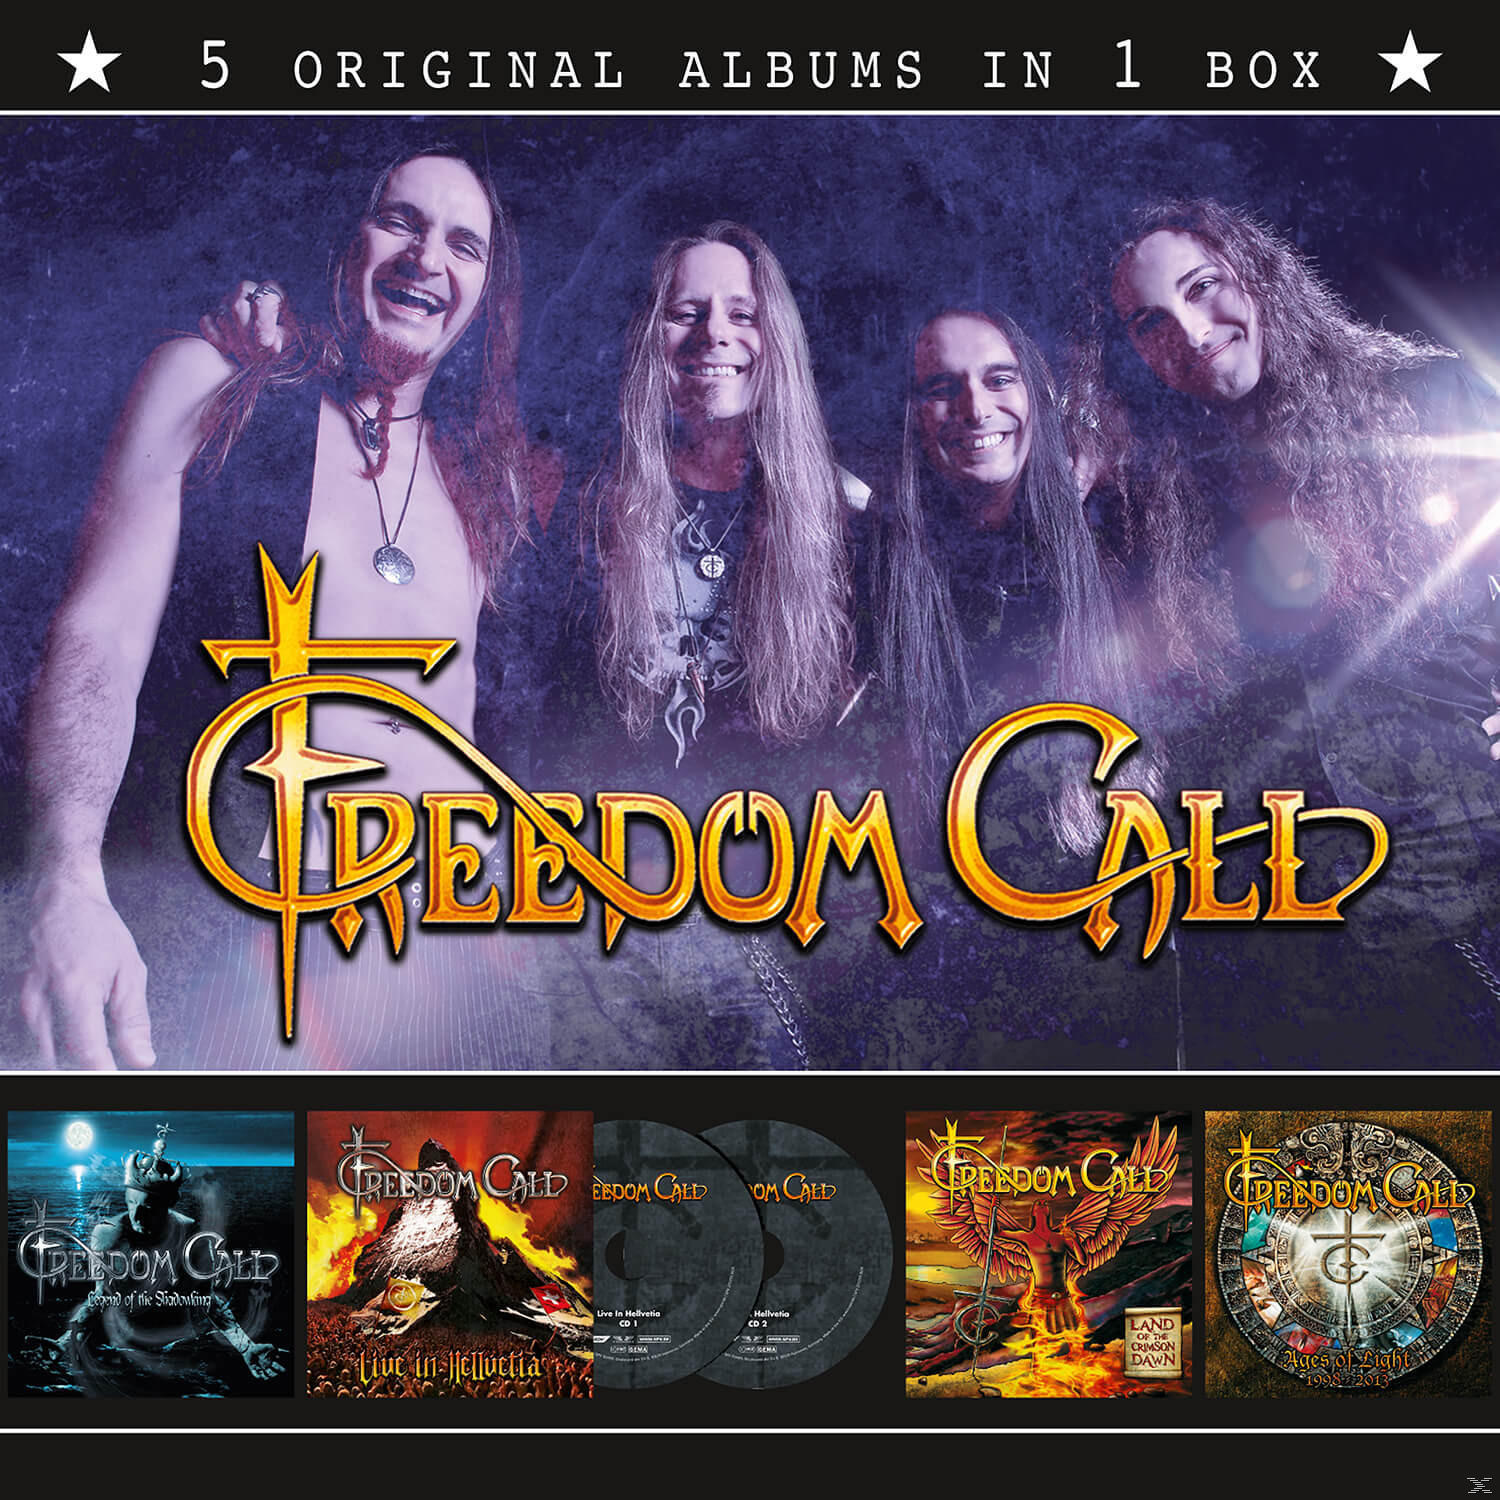 Original Box) CALL 1 - (CD) Freedom (5 Albums In Call - FREEDOM